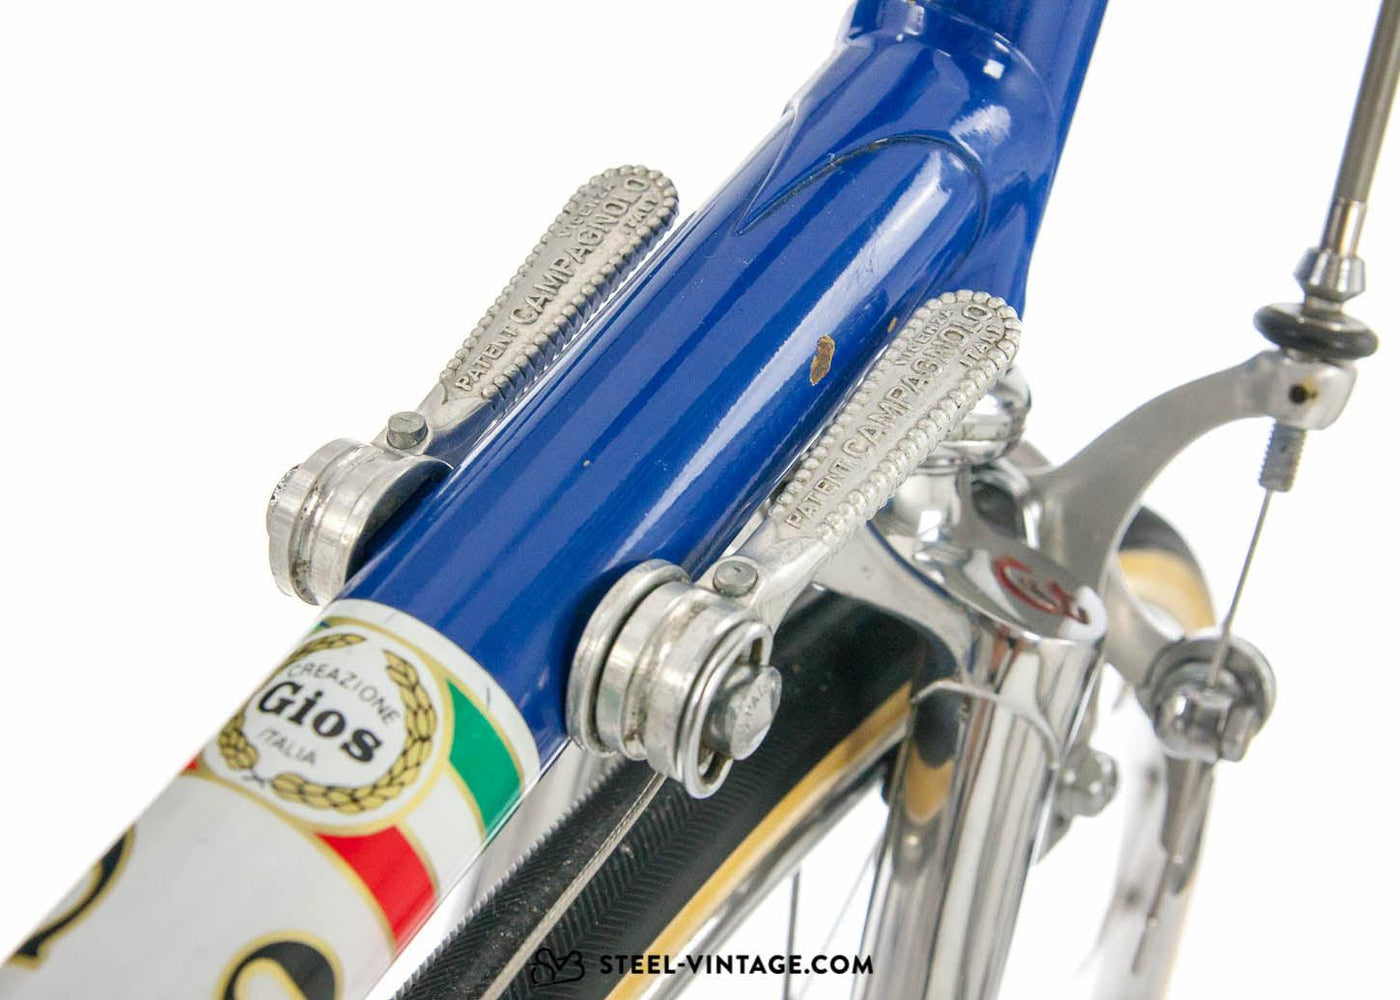 Gios Torino Super Record Road Bike 1970s - Steel Vintage Bikes